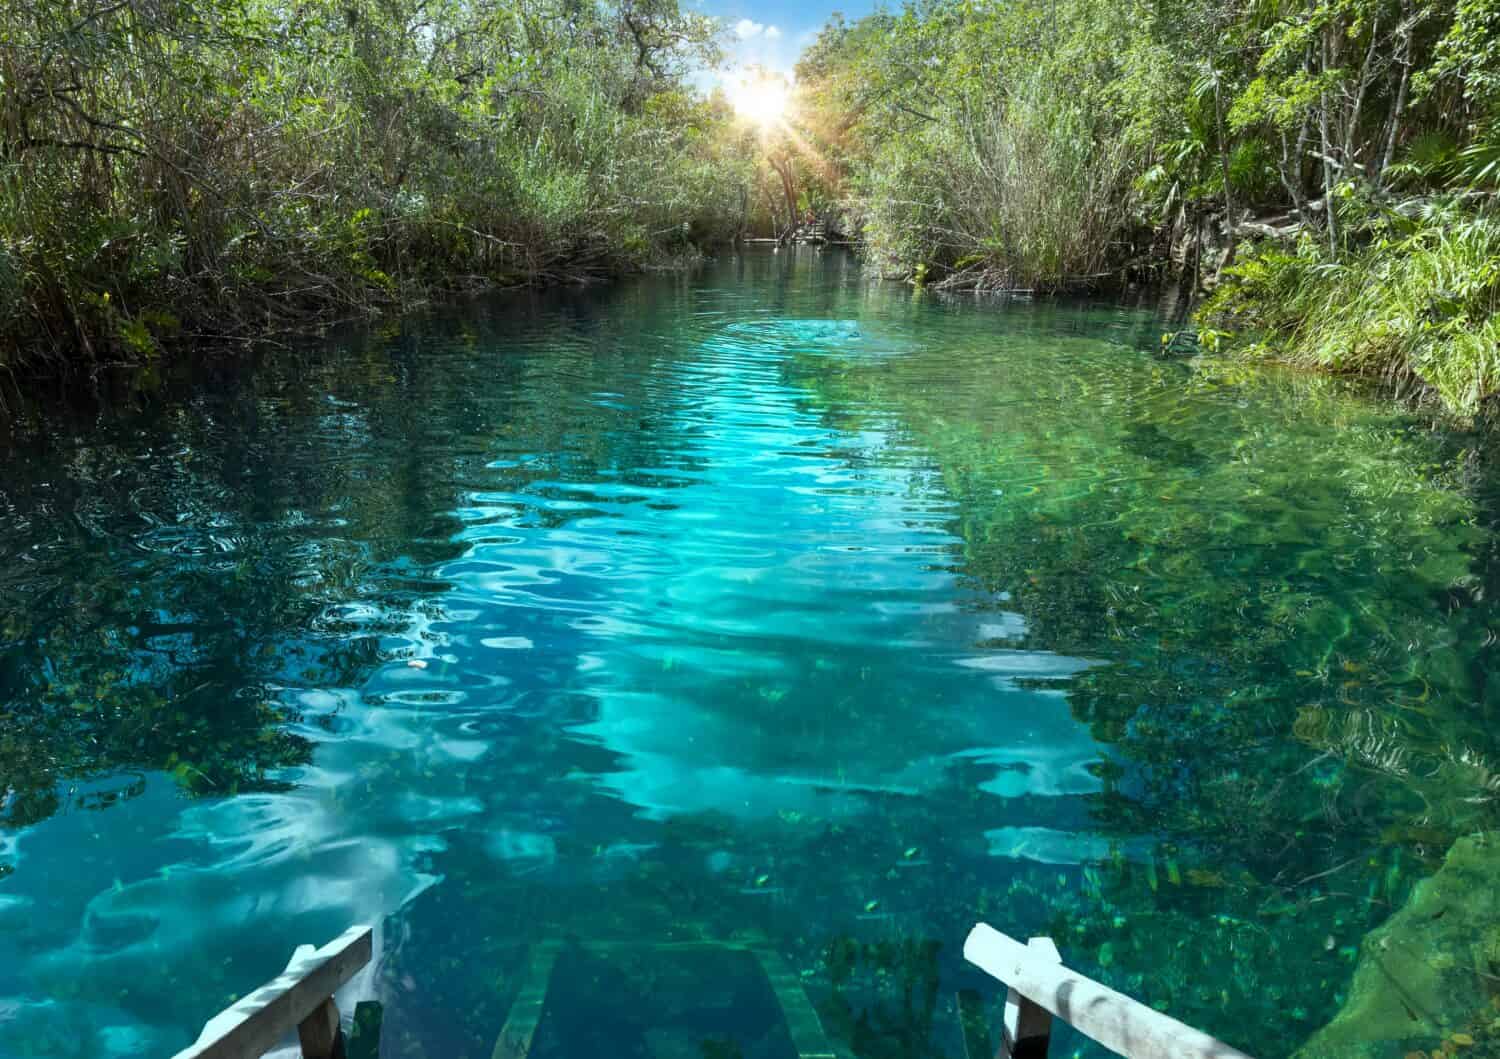 Mexico tourism destination, caves and pools of Cenote Escondido near Tulum and Playa Del Carmen.